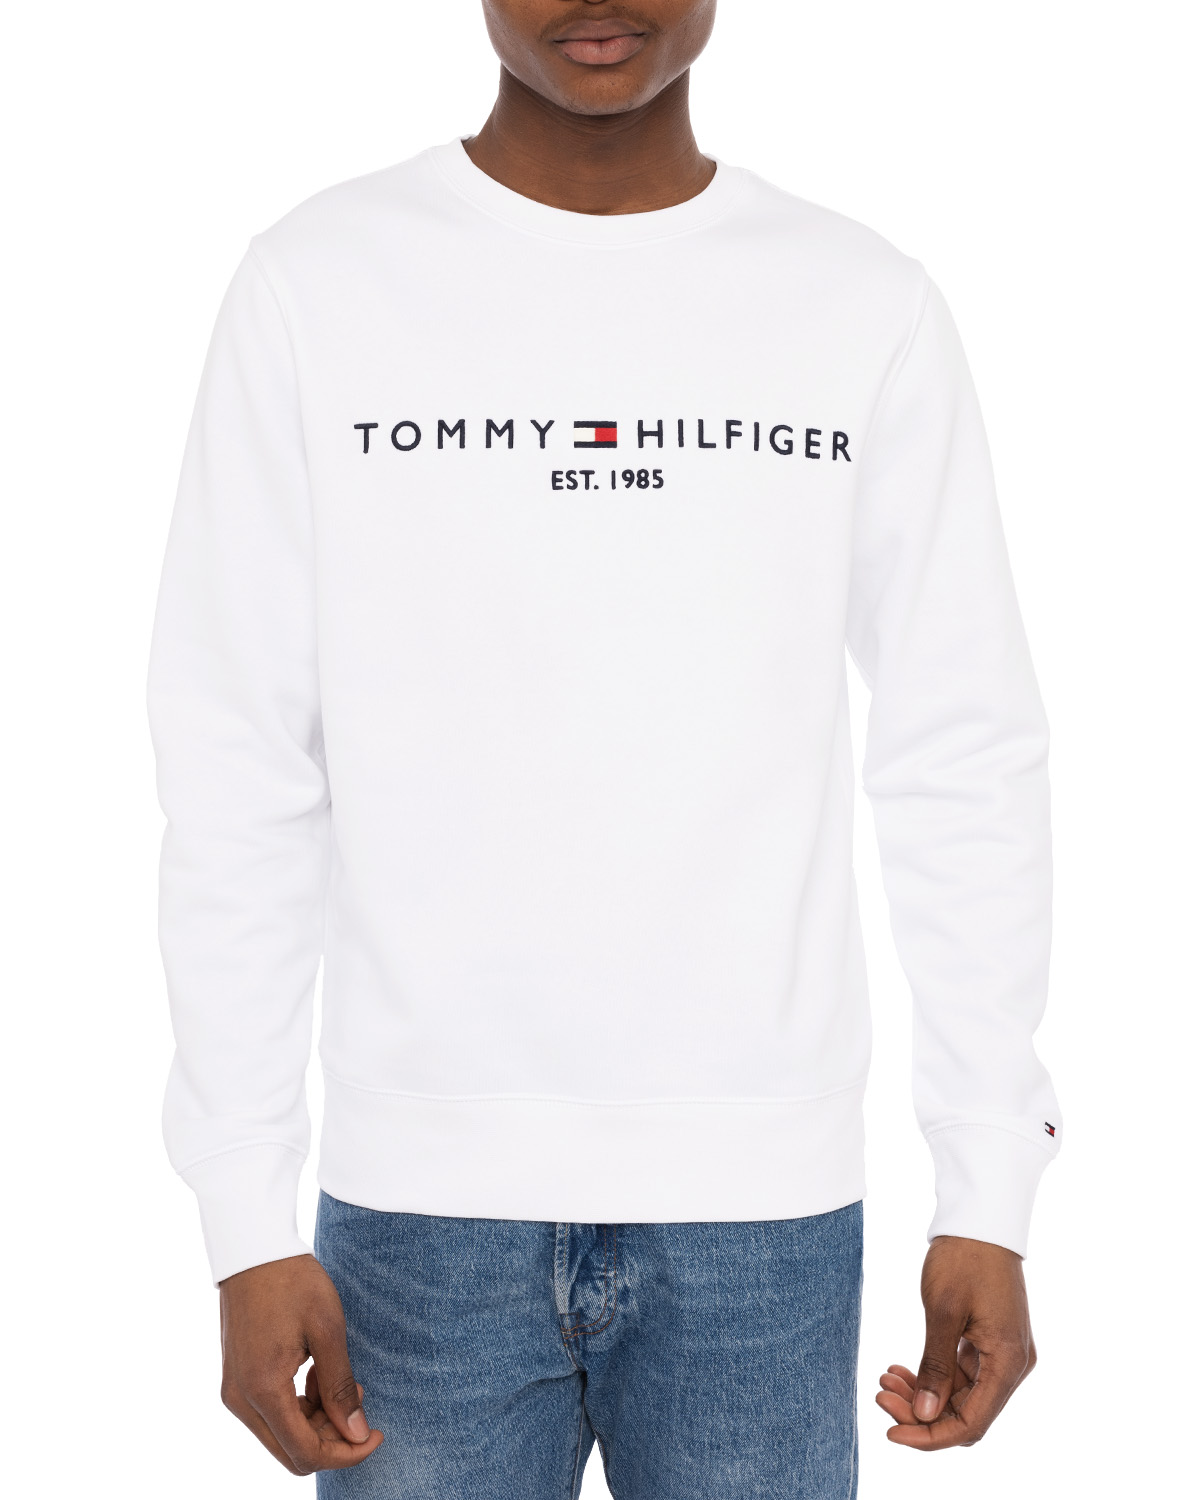 Tommy Hilfiger Est 1985 Logo | ubicaciondepersonas.cdmx.gob.mx